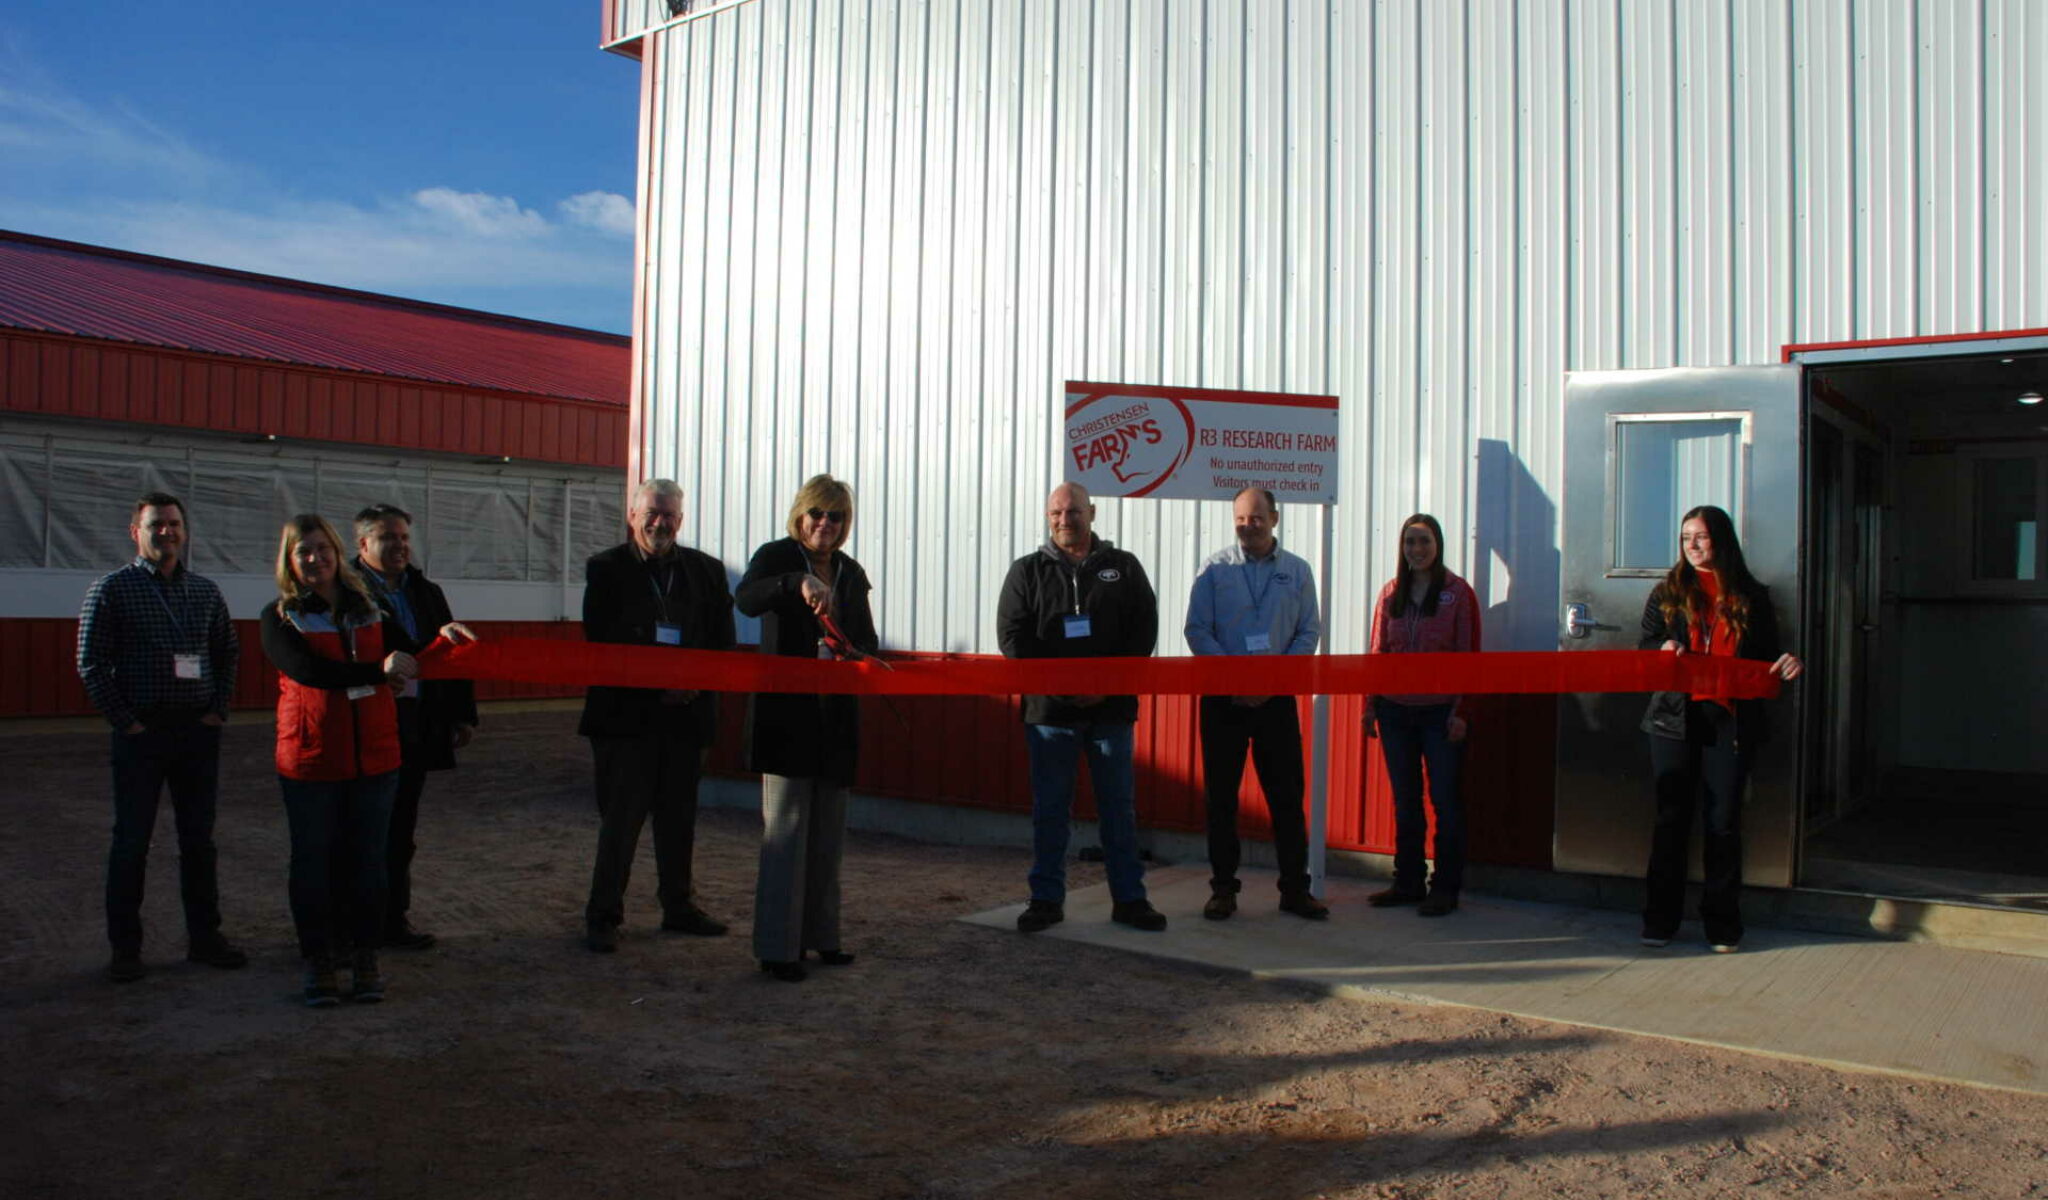 Christensen Farms’ Celebrates New Research Farm Opening